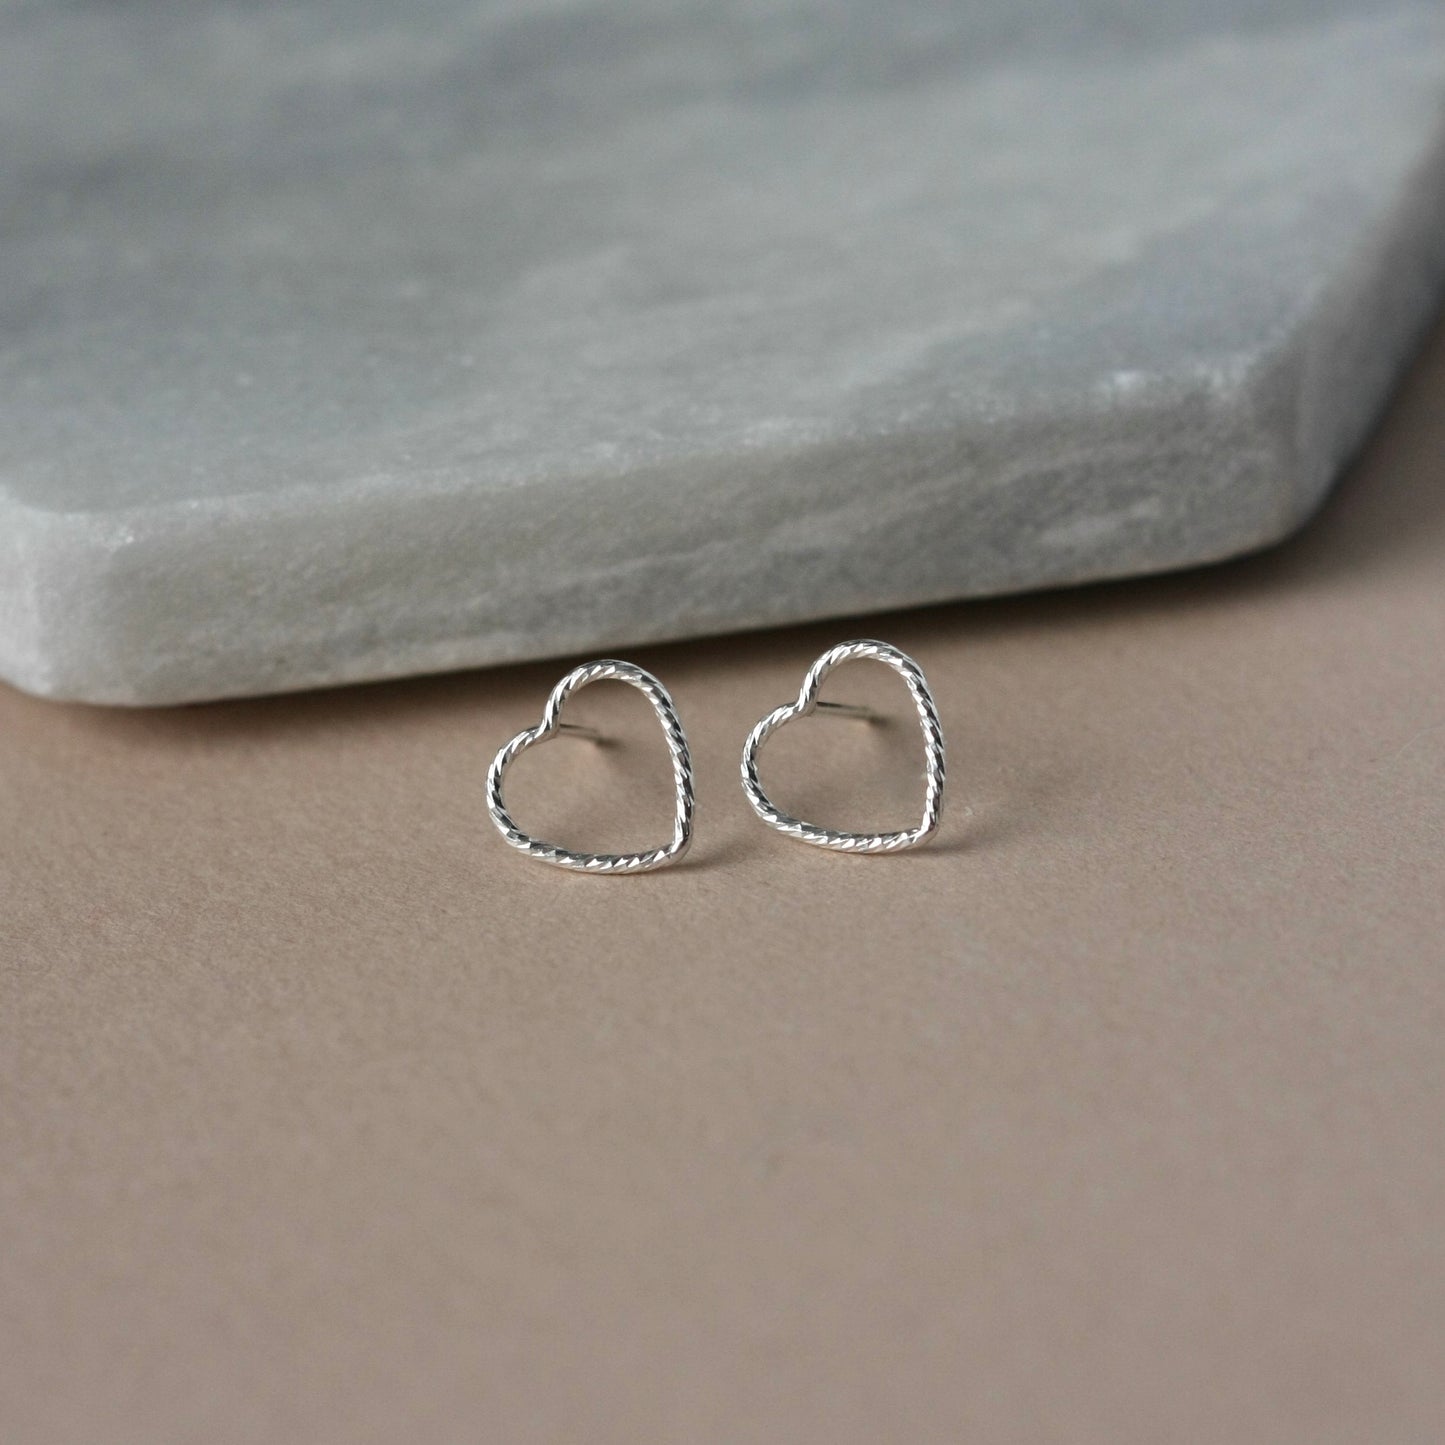 Sparkly Sterling Silver Heart Stud Earrings